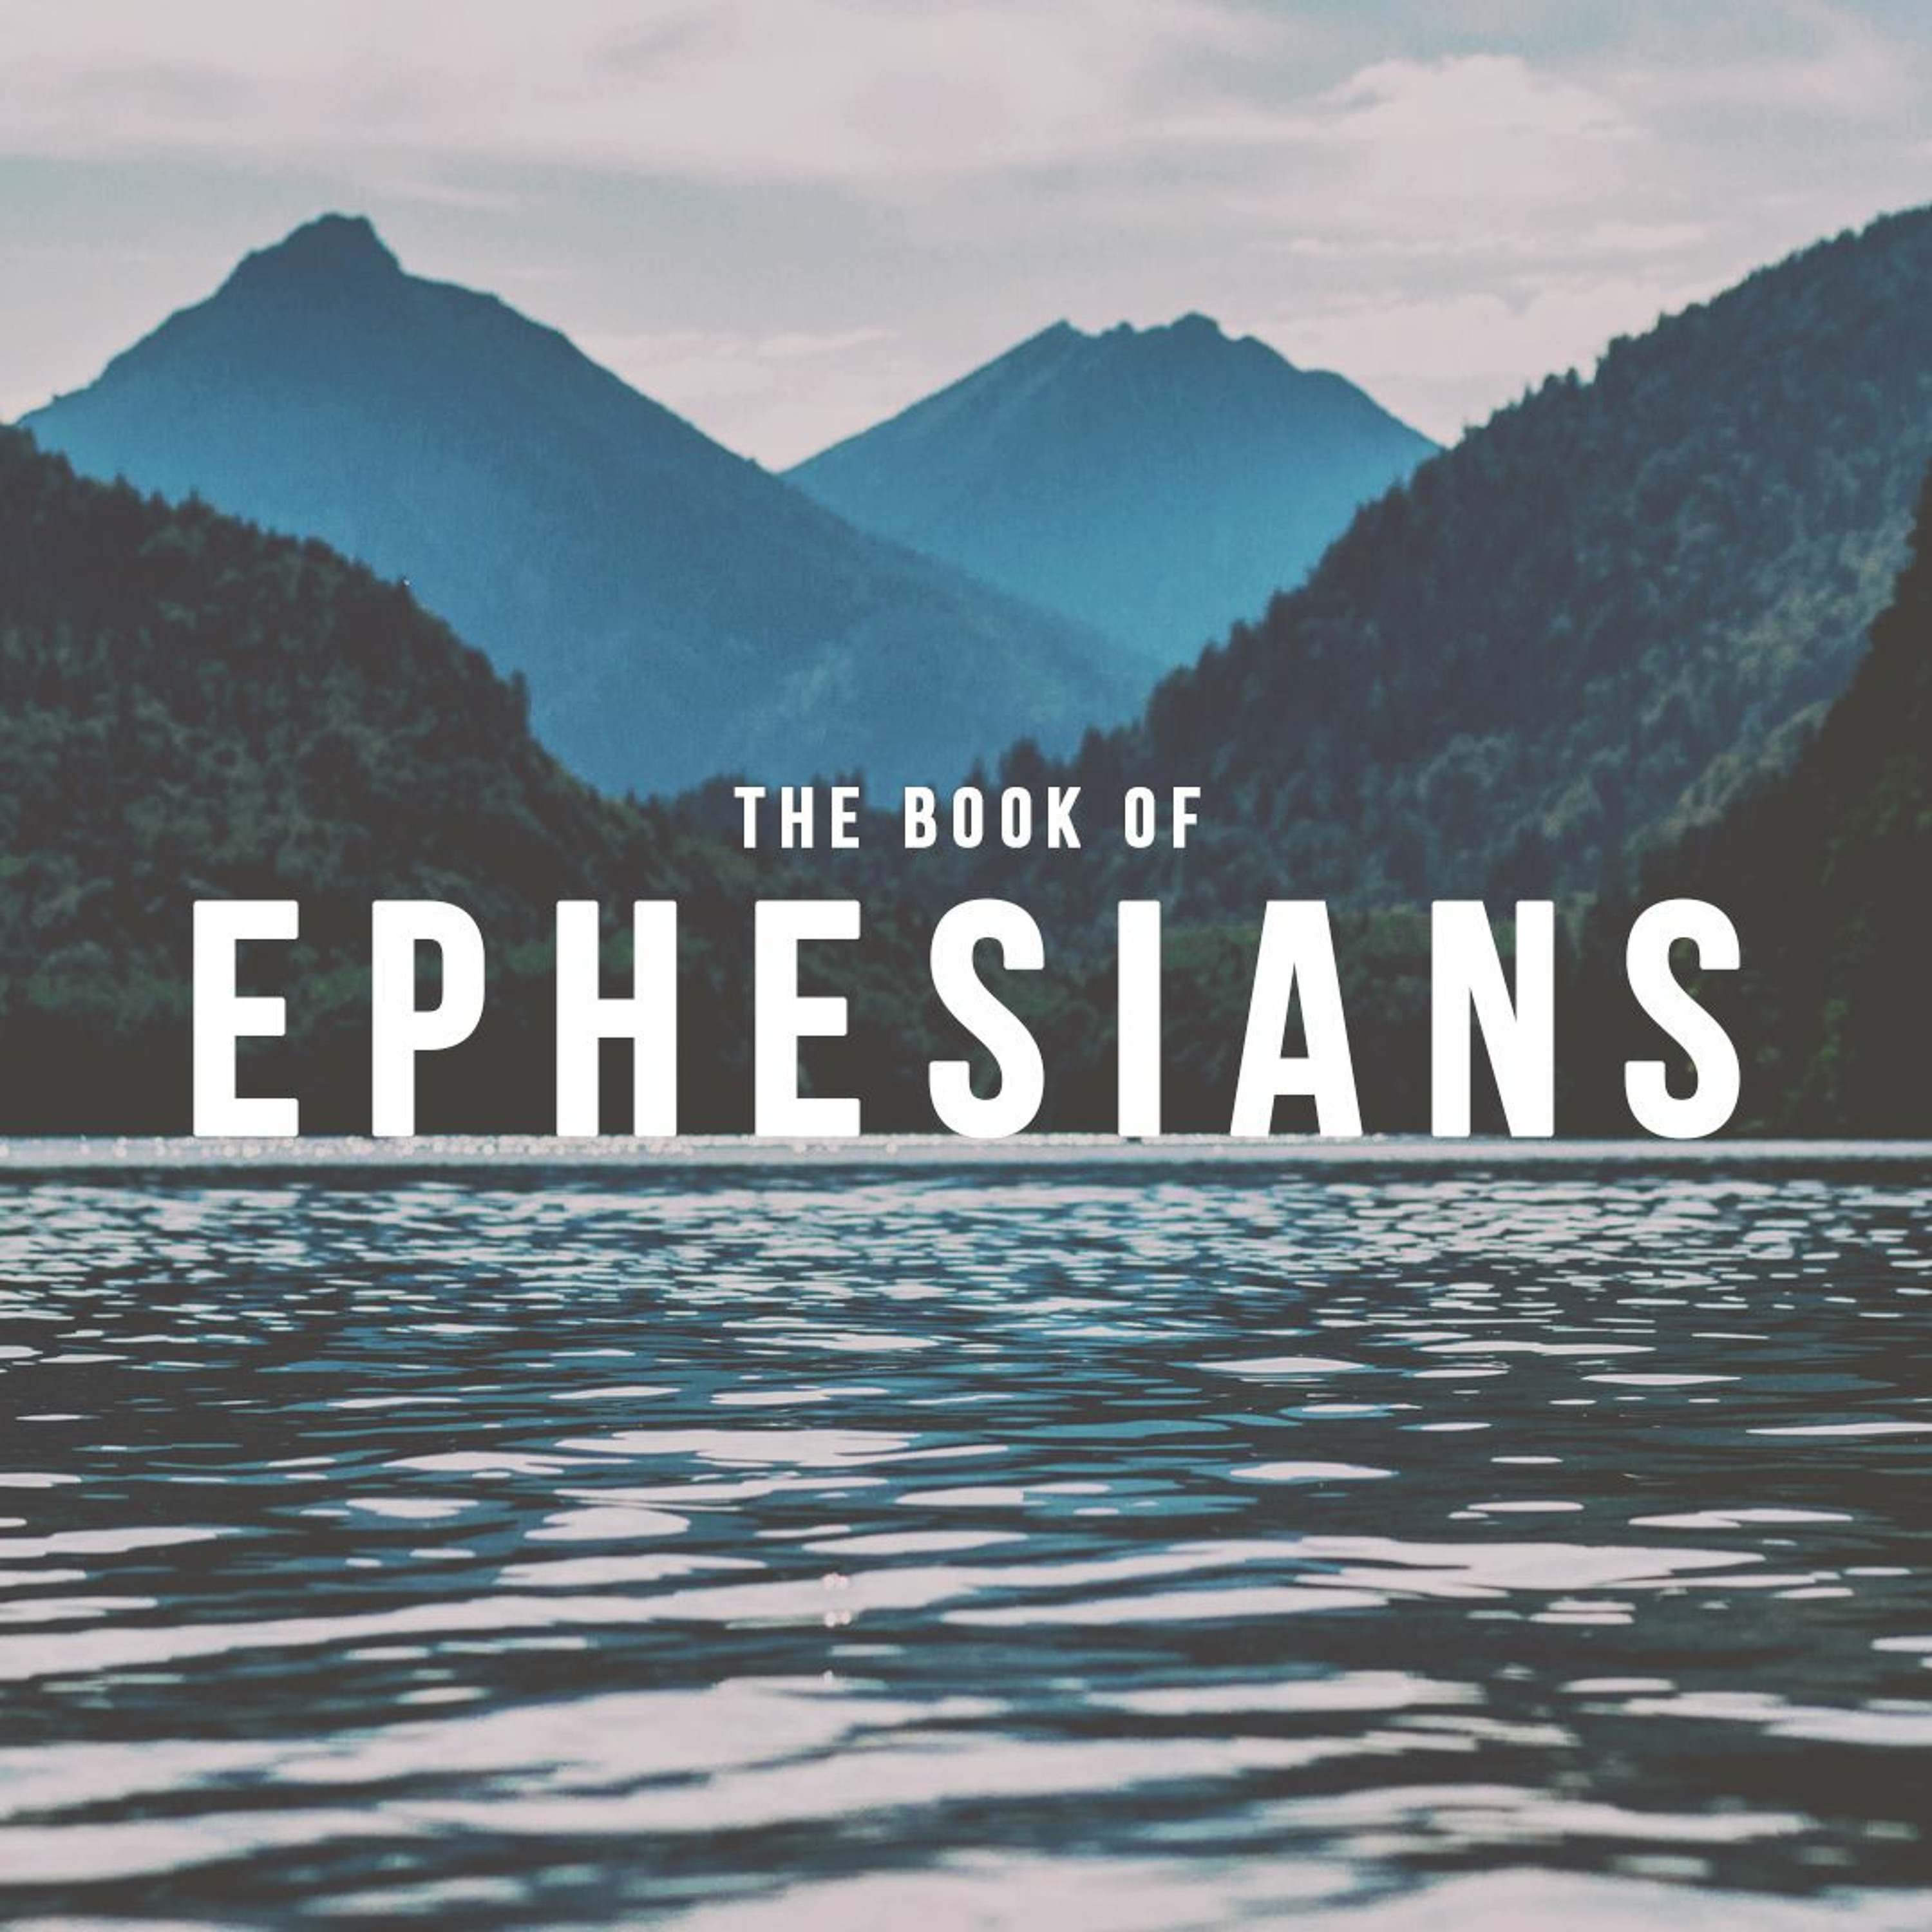 Ephesians: Imitators of God - David Hunter - JULY 14 AM Service